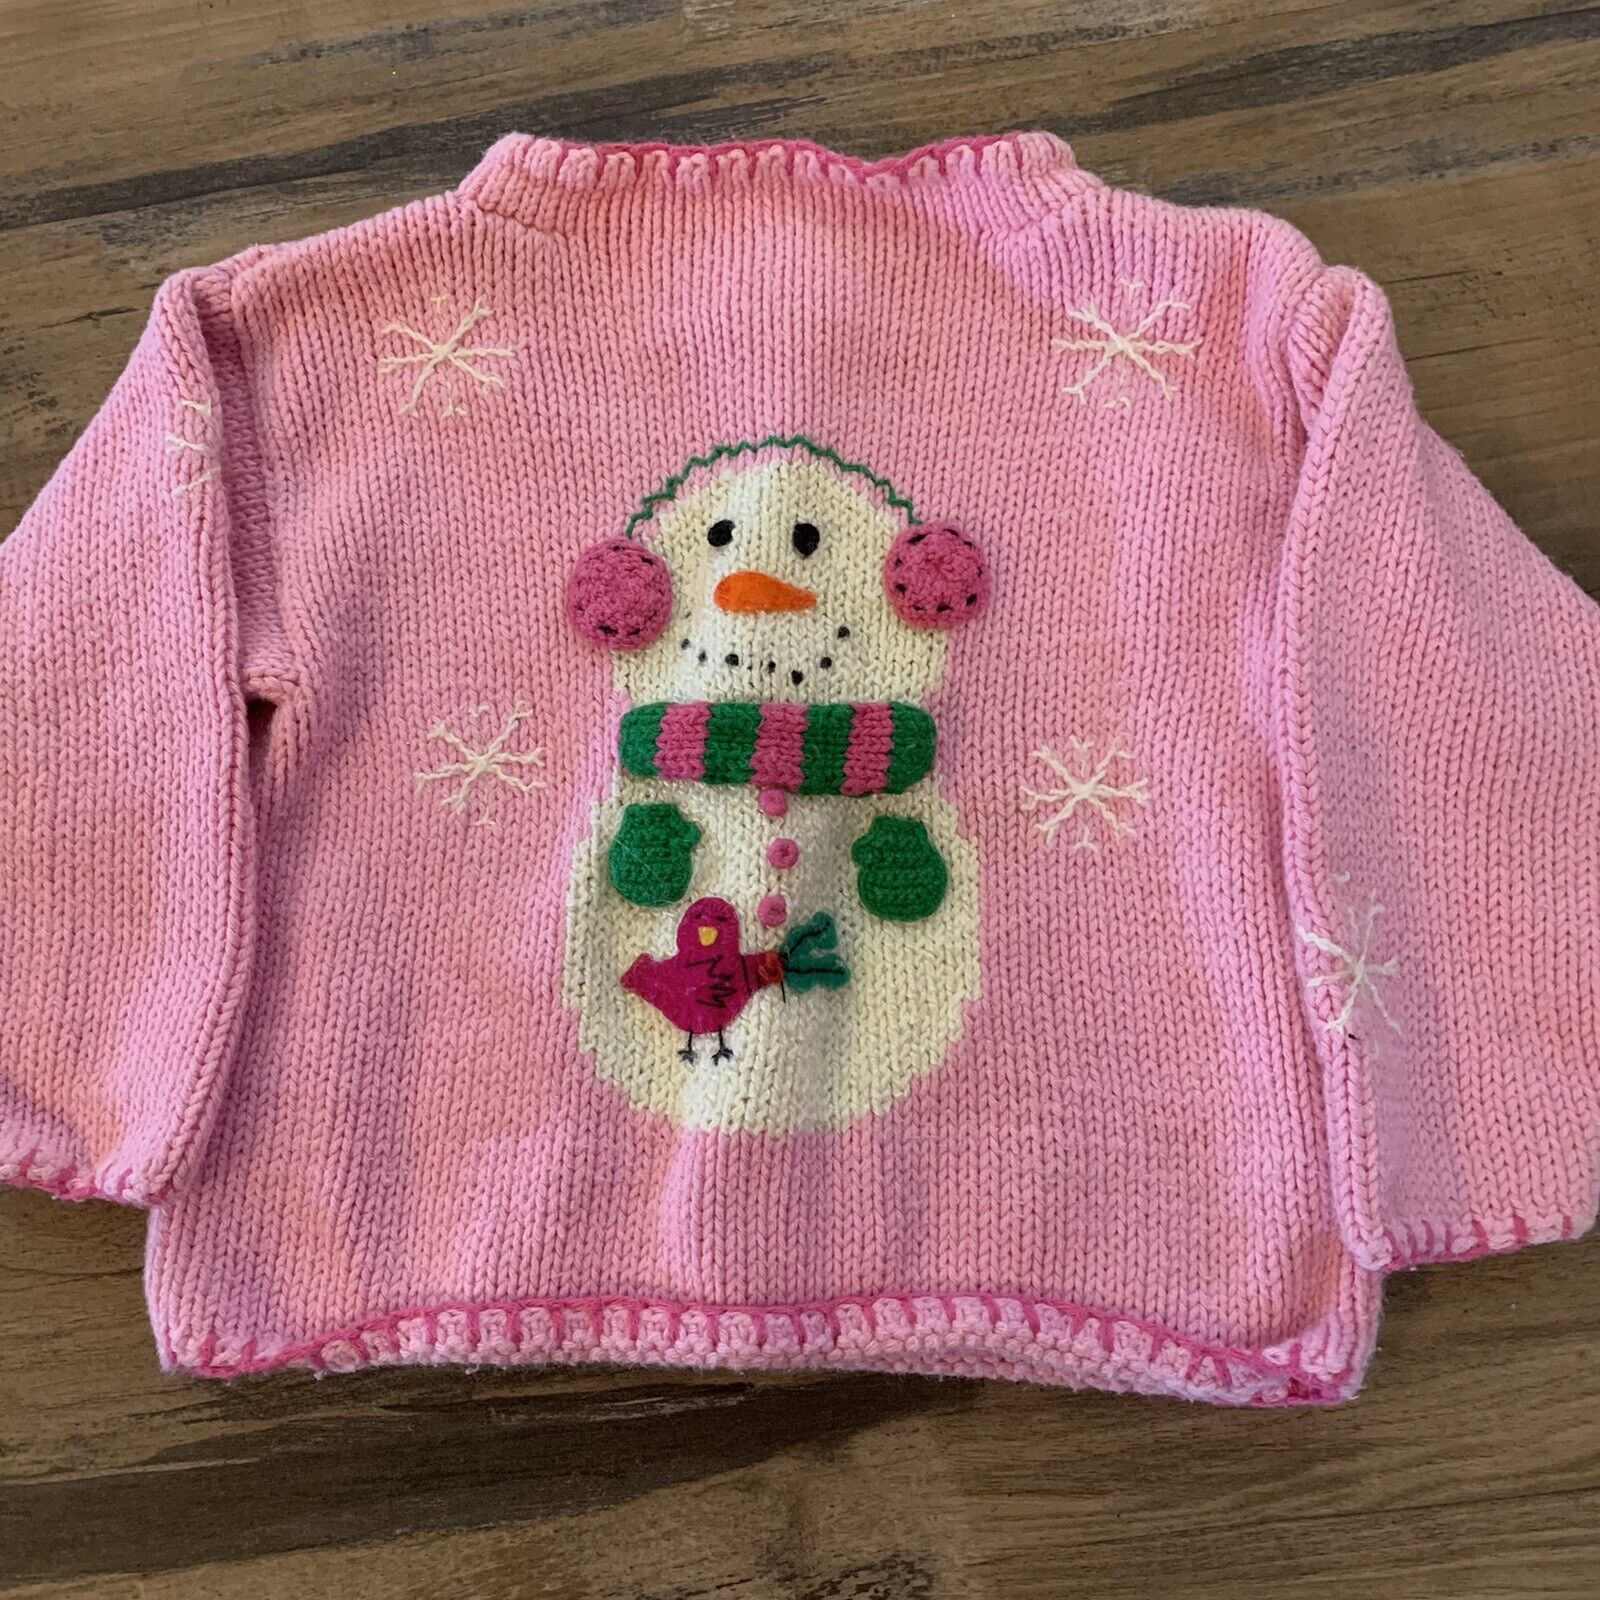 SAM'S FRIEND Girls Cardigan Sweater online shop 3D Top 2T Size Snowman Colorado Springs Mall Pink